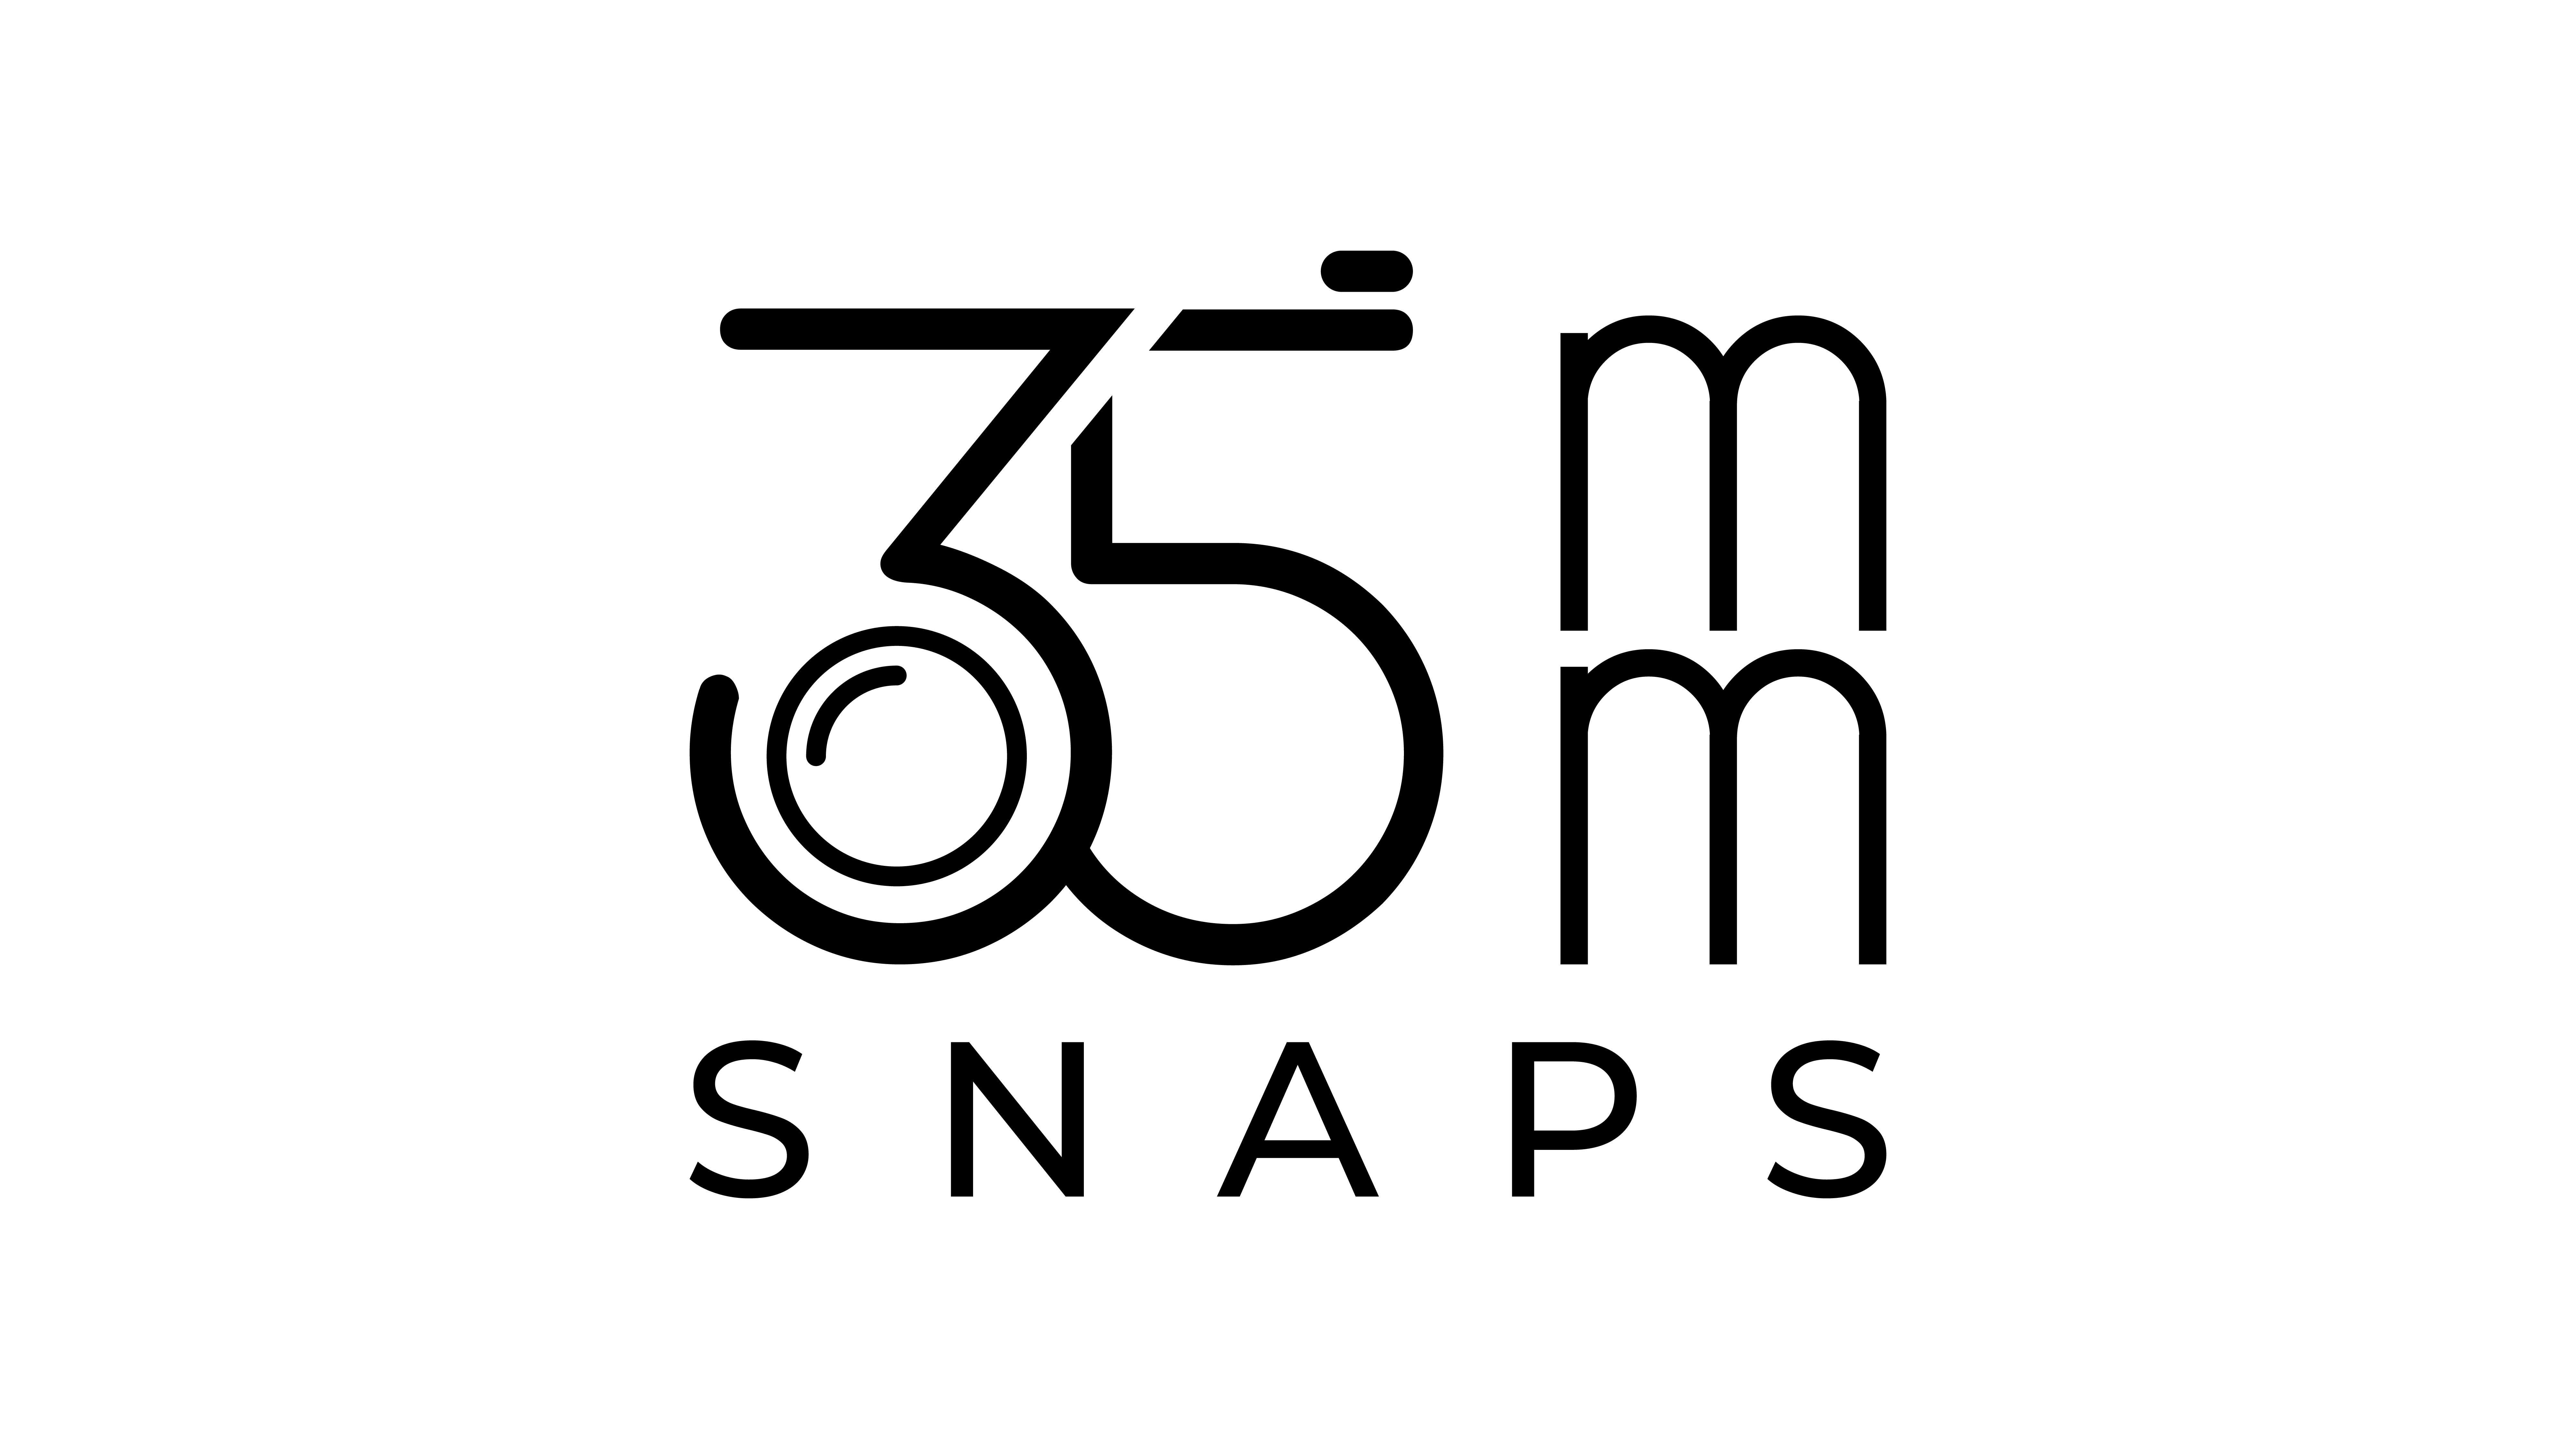 35mm Snaps